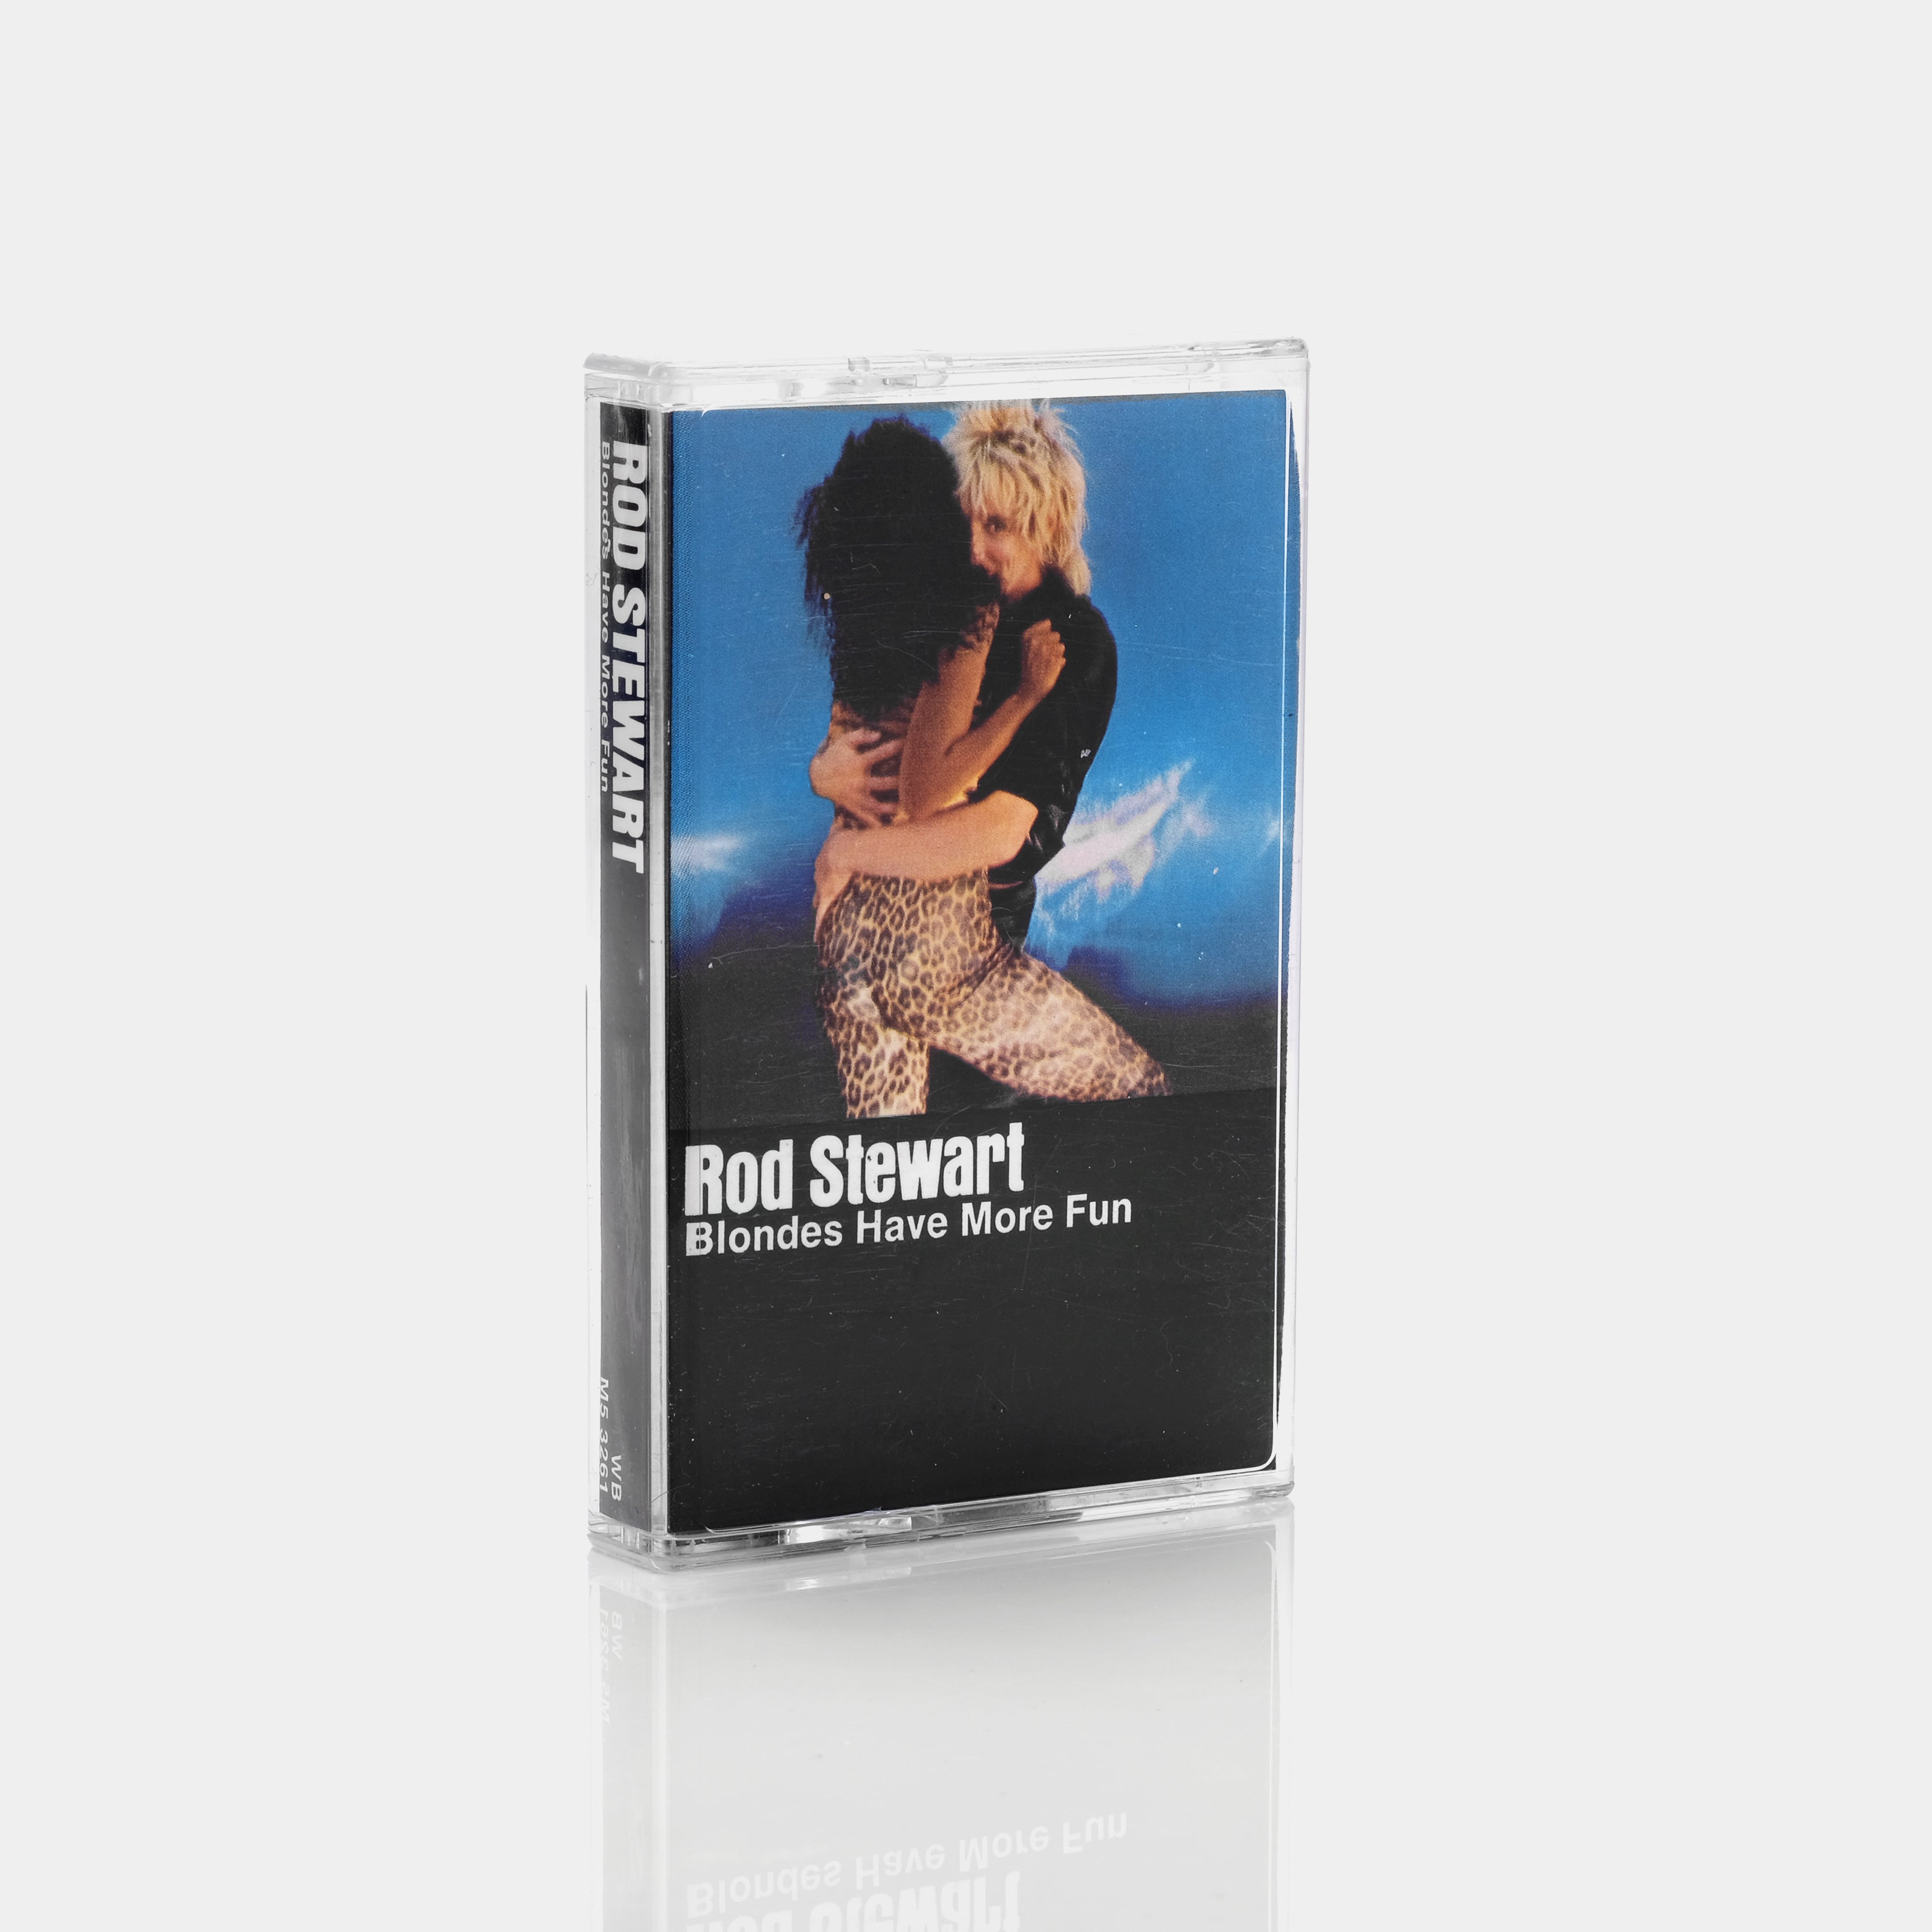 Rod Stewart - Blondes Have More Fun Cassette Tape